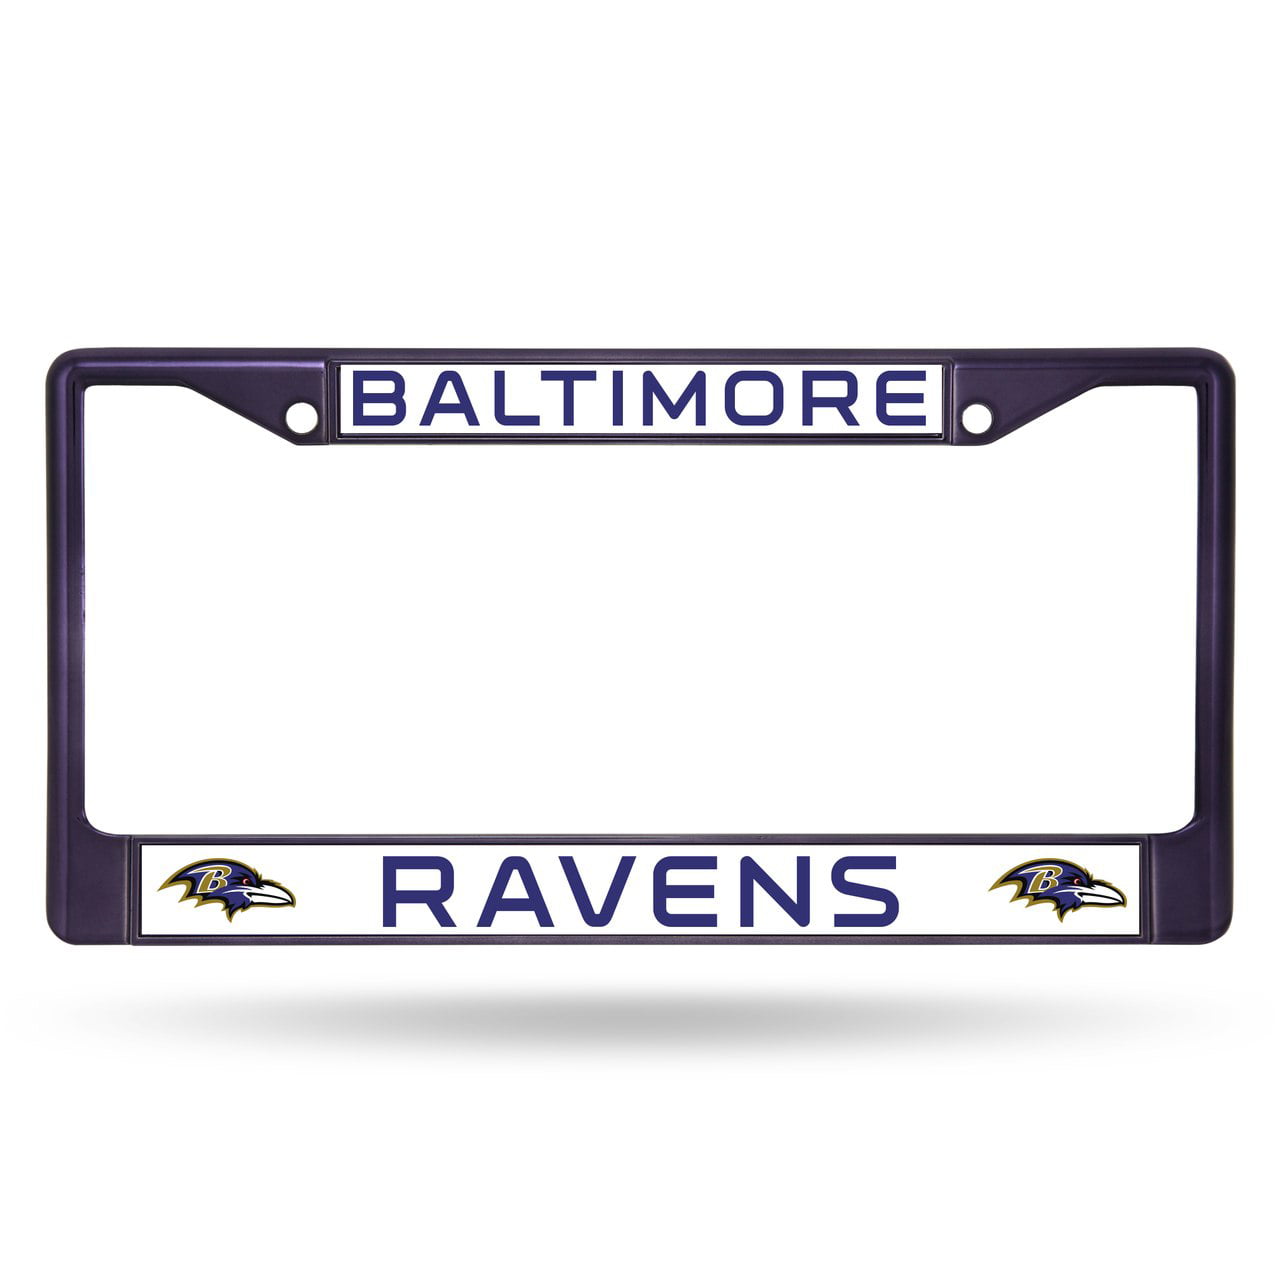 Rico Industries Baltimore Ravens Metal Tag License Plate Carbon Fiber Design Premium Aluminum Novelty Football Inc 